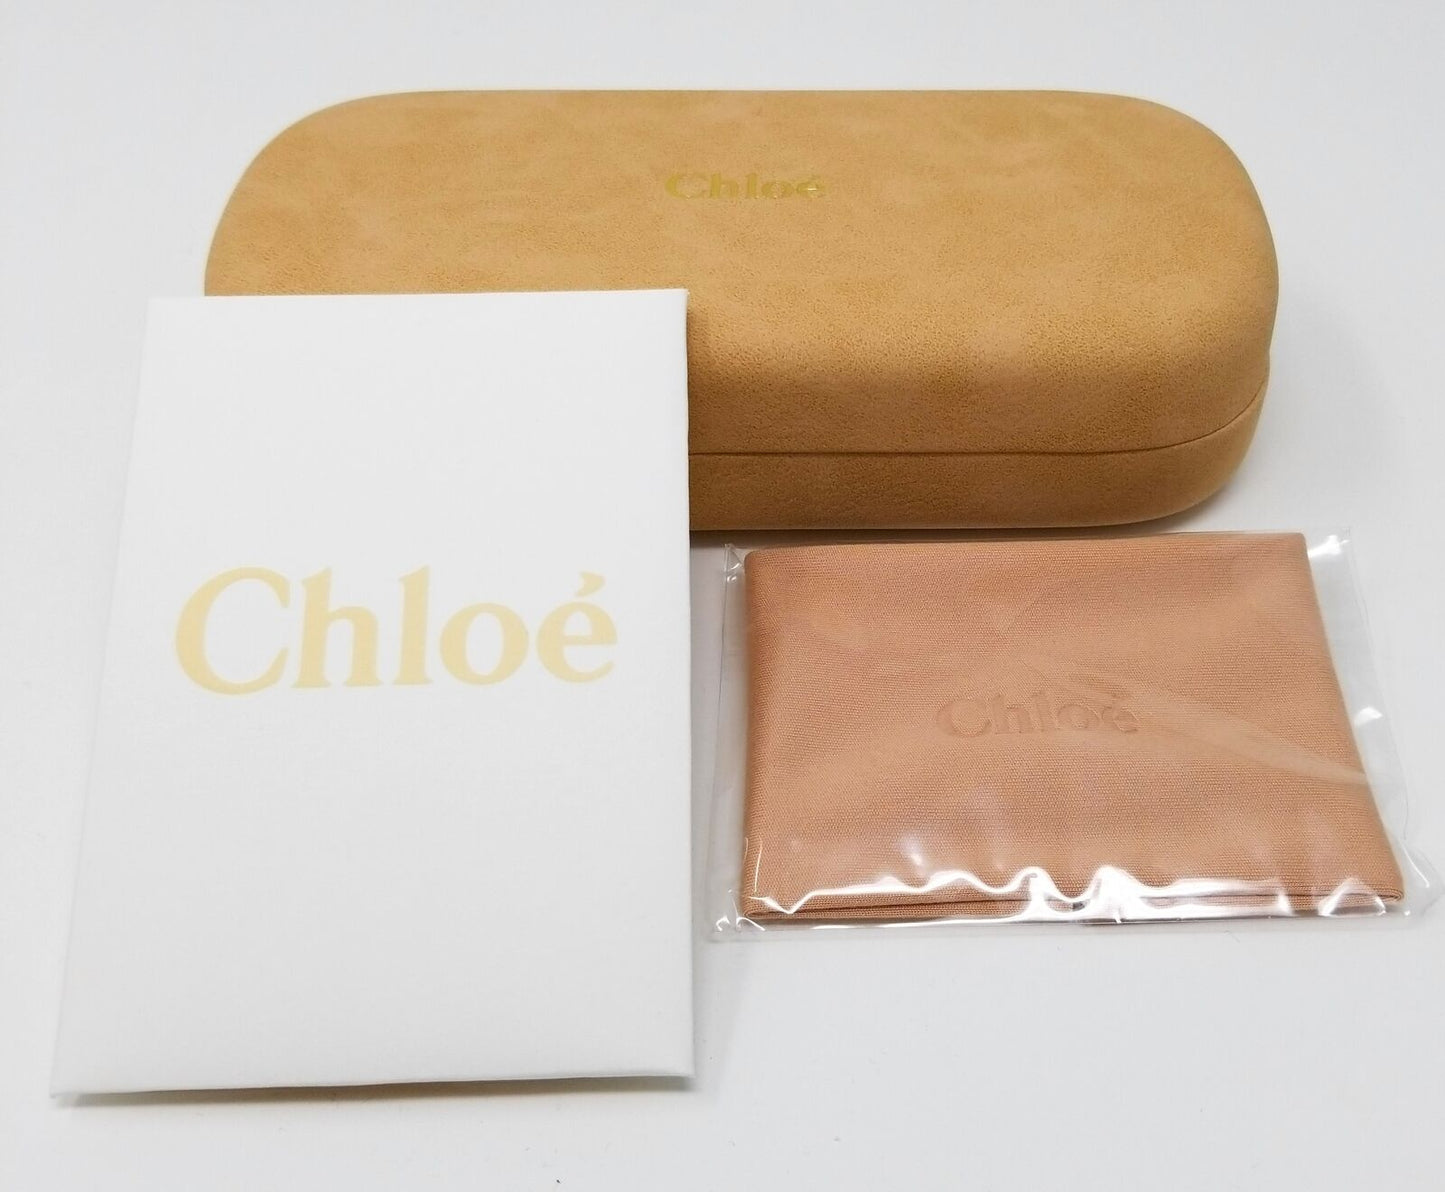 Chloe CE2604-405 47mm